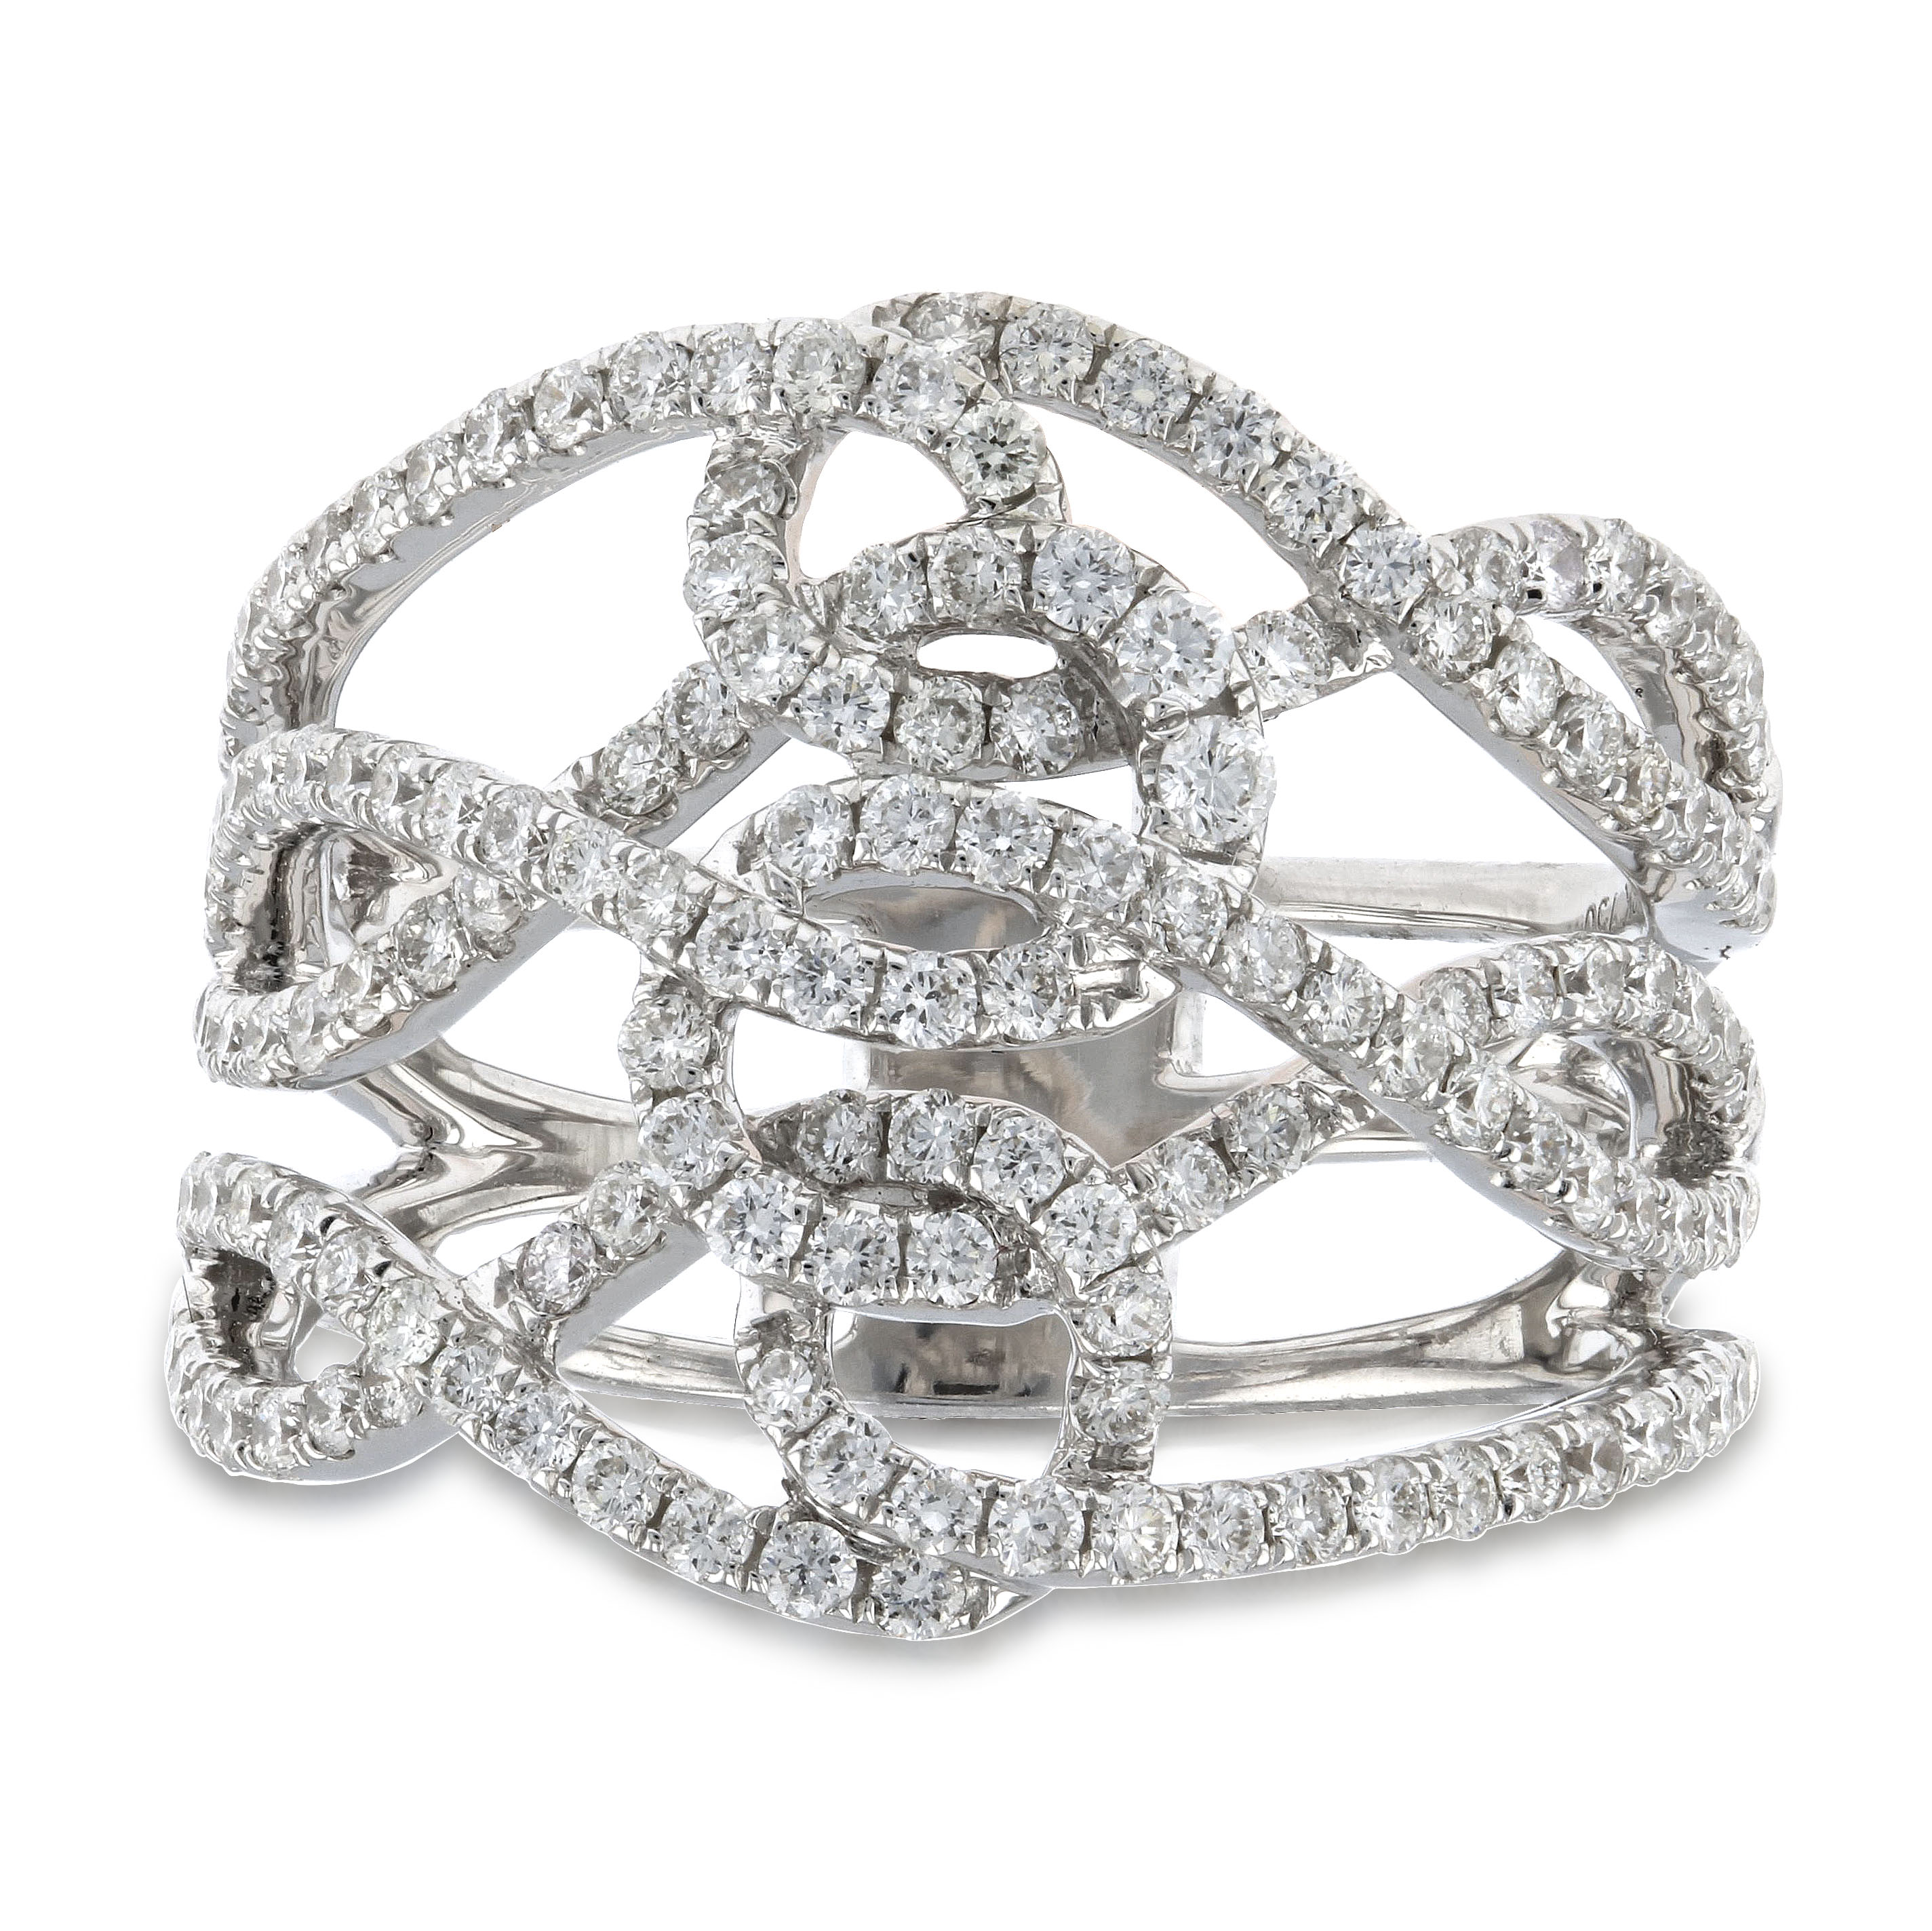 View 1.13ctw Diamond Fashion Ring in 18k White Gold